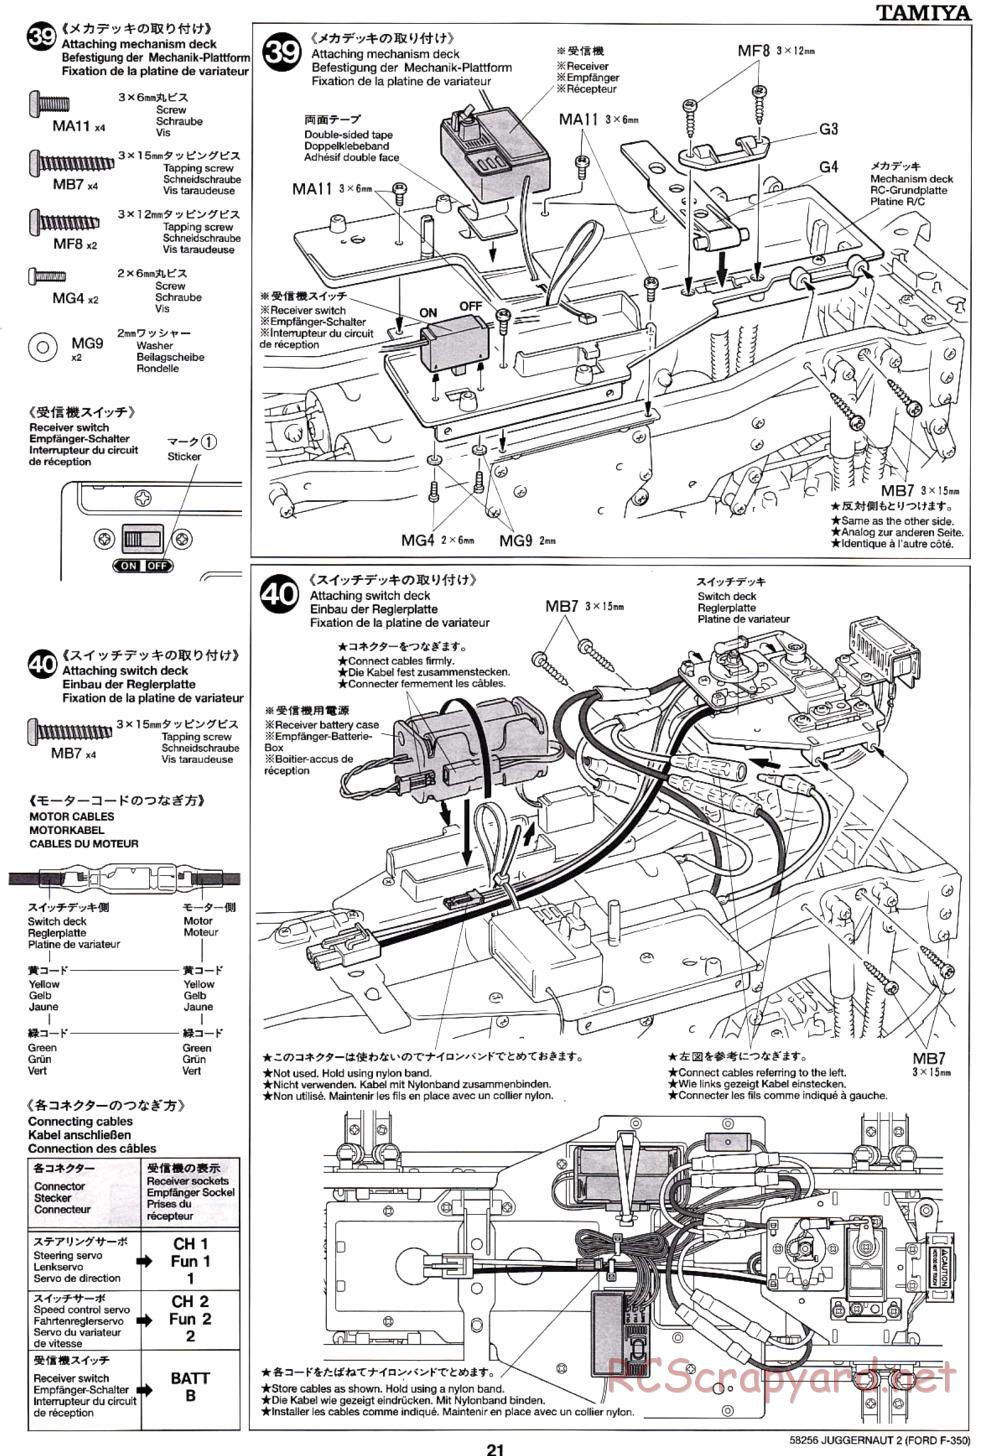 Tamiya - Juggernaut 2 Chassis - Manual - Page 21